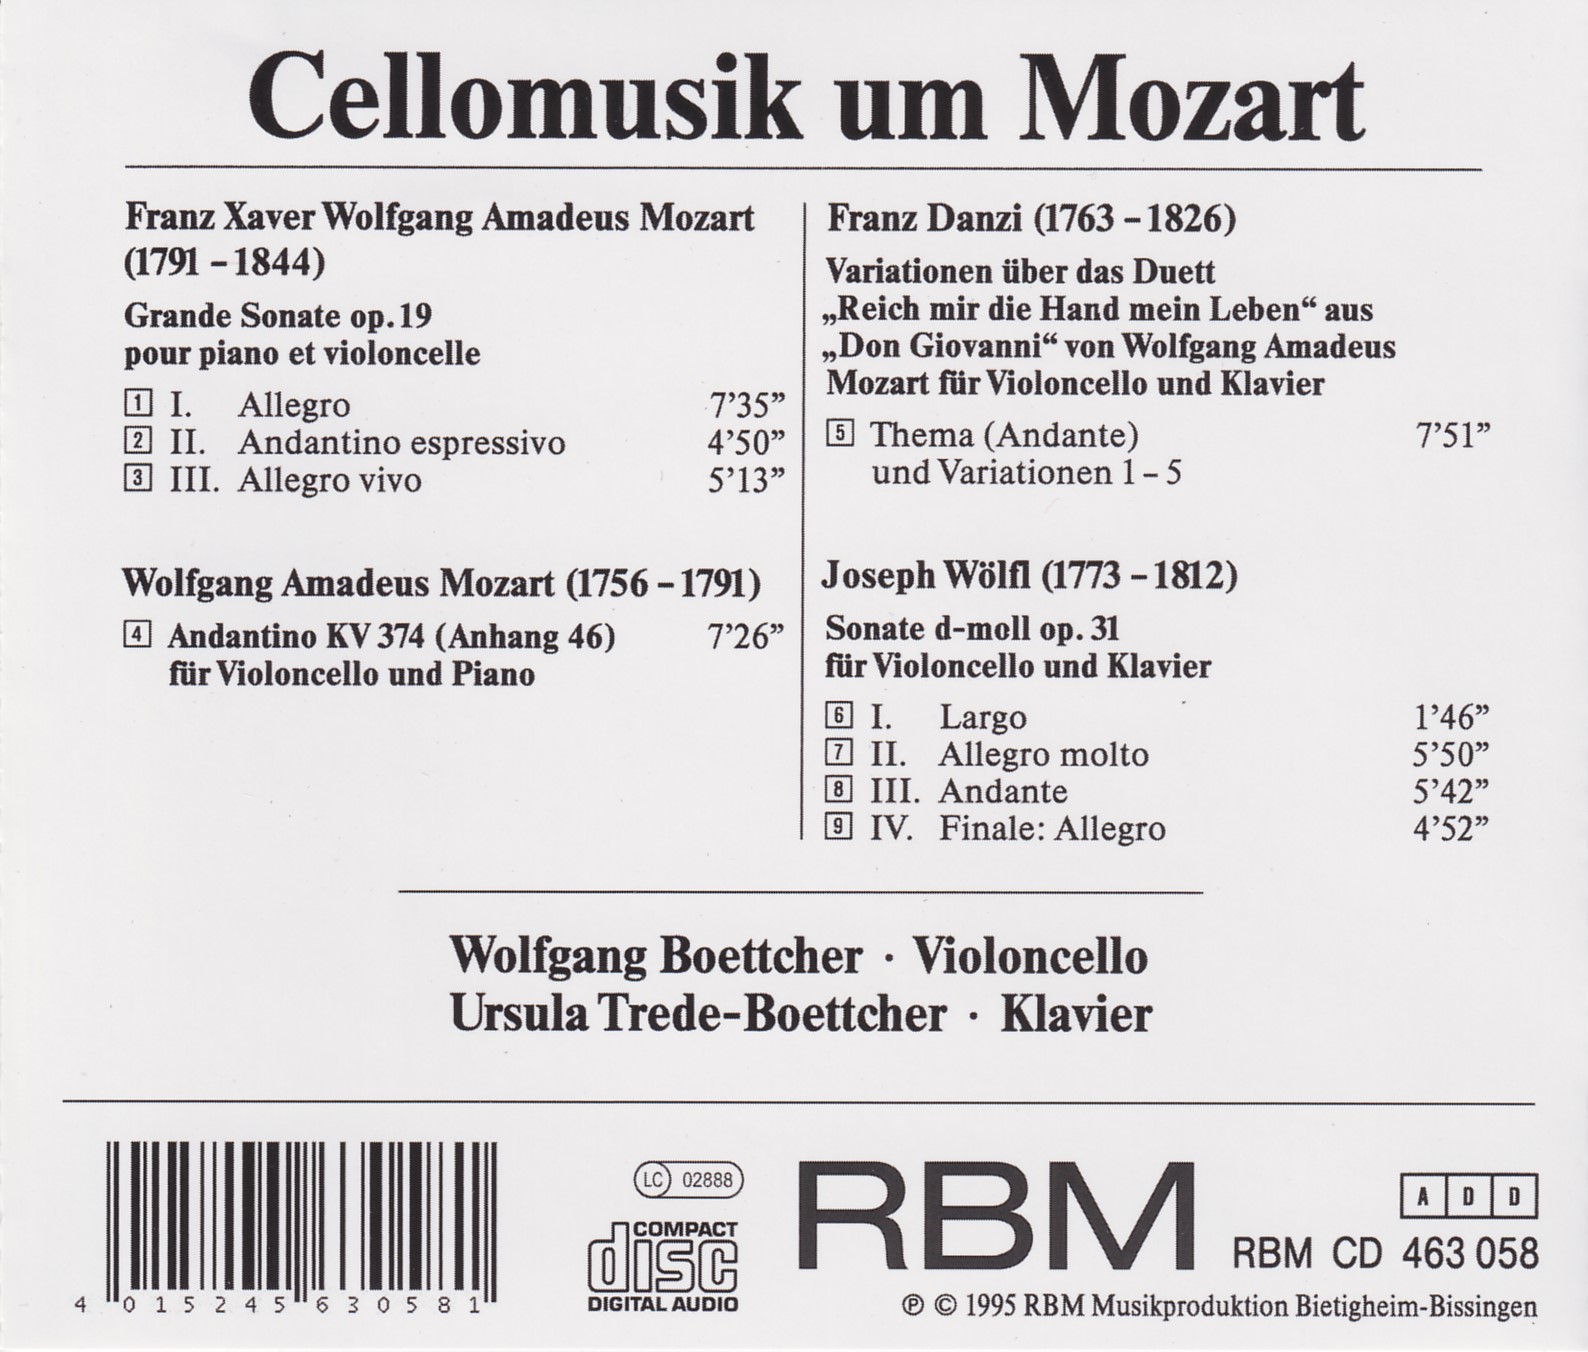 Cellomusik um Mozart